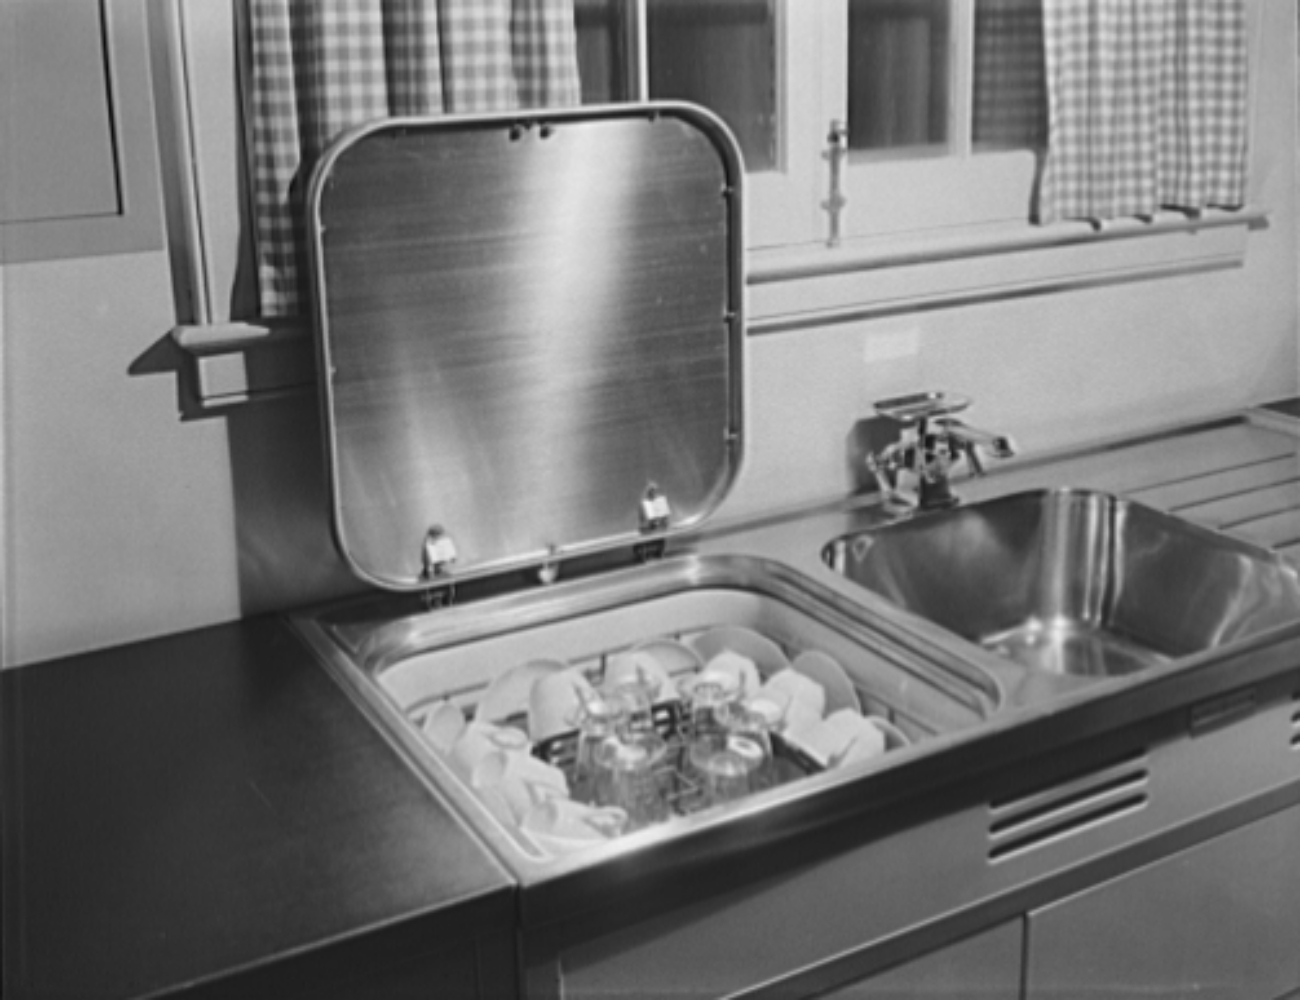 early dishwasher machine in kitchen